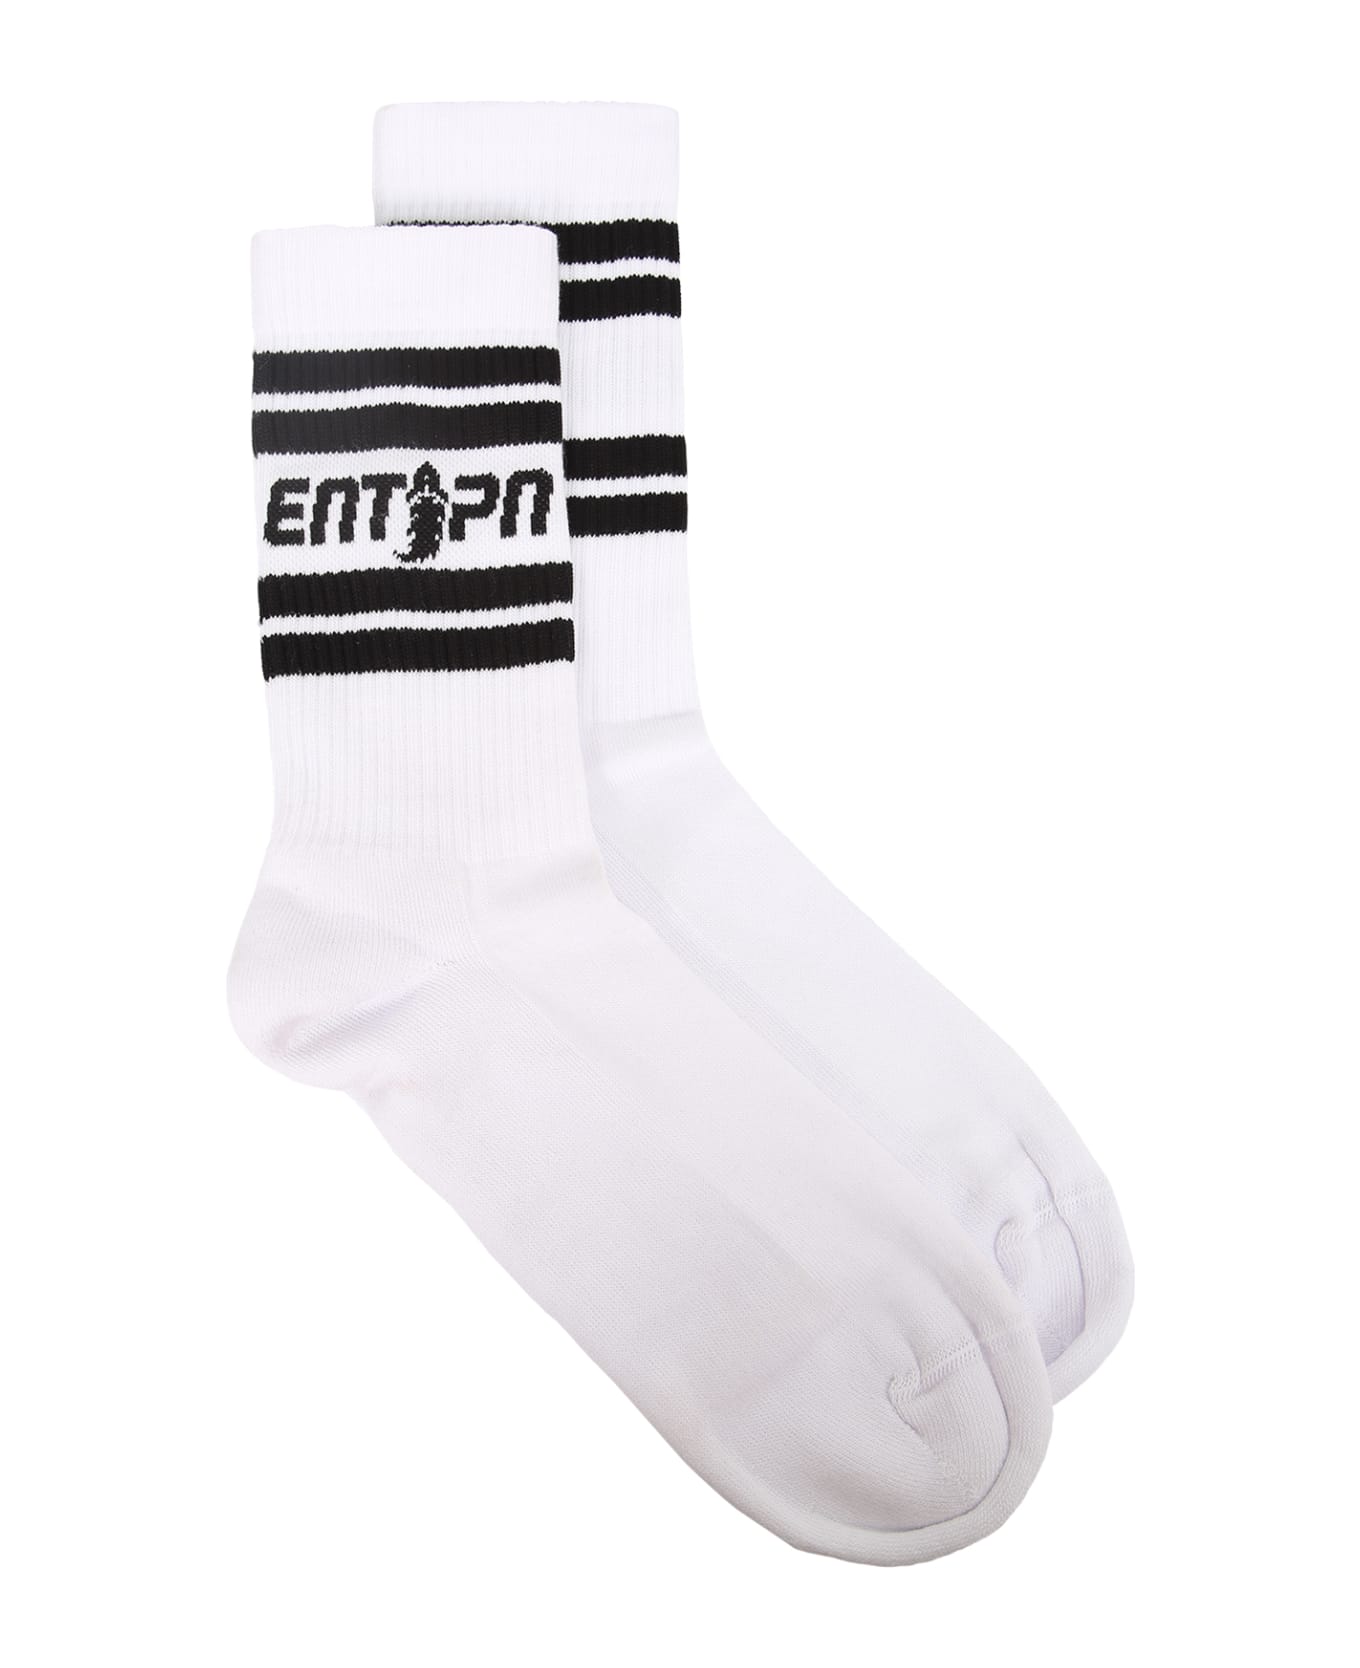 Enterprise Japan Logo Socks - White 靴下